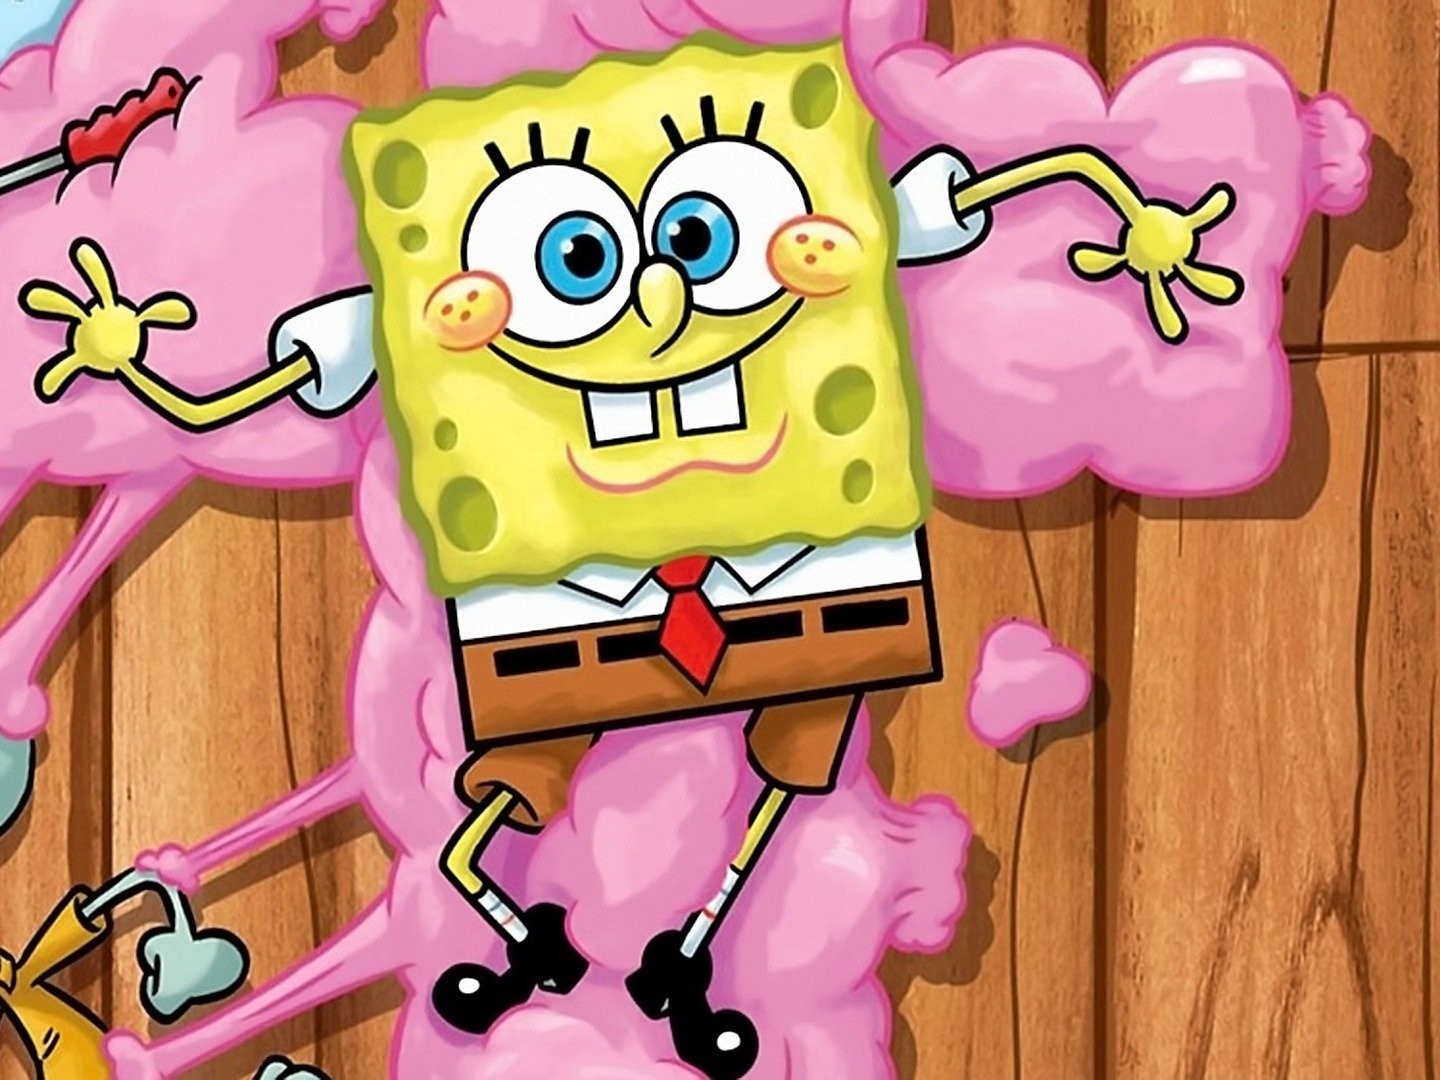 SpongeBob SquarePants Season 4 Pictures